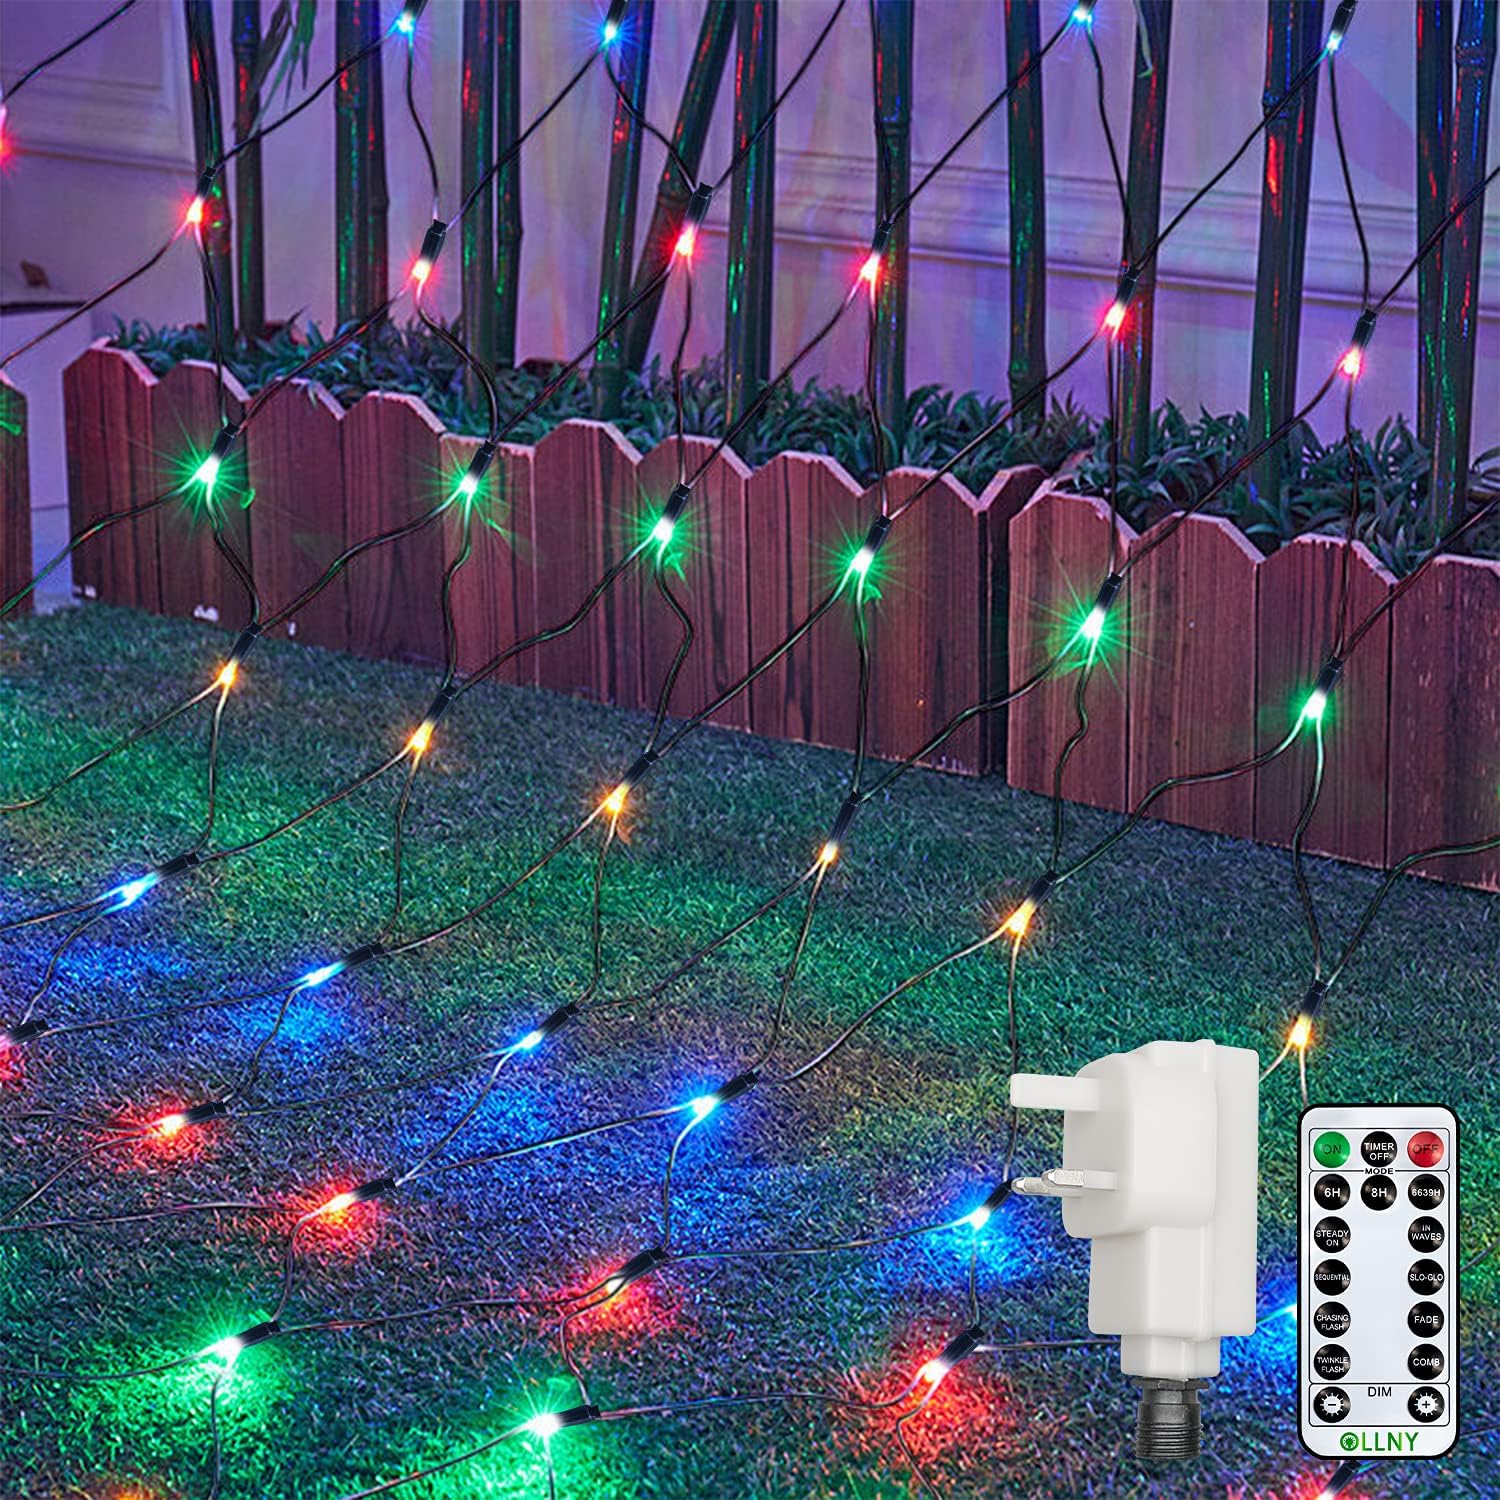 Outdoor Net Lights 240 Led Christmas Mains Powered Garden Fence Curtain Decor UK Świetna wartość zapasów